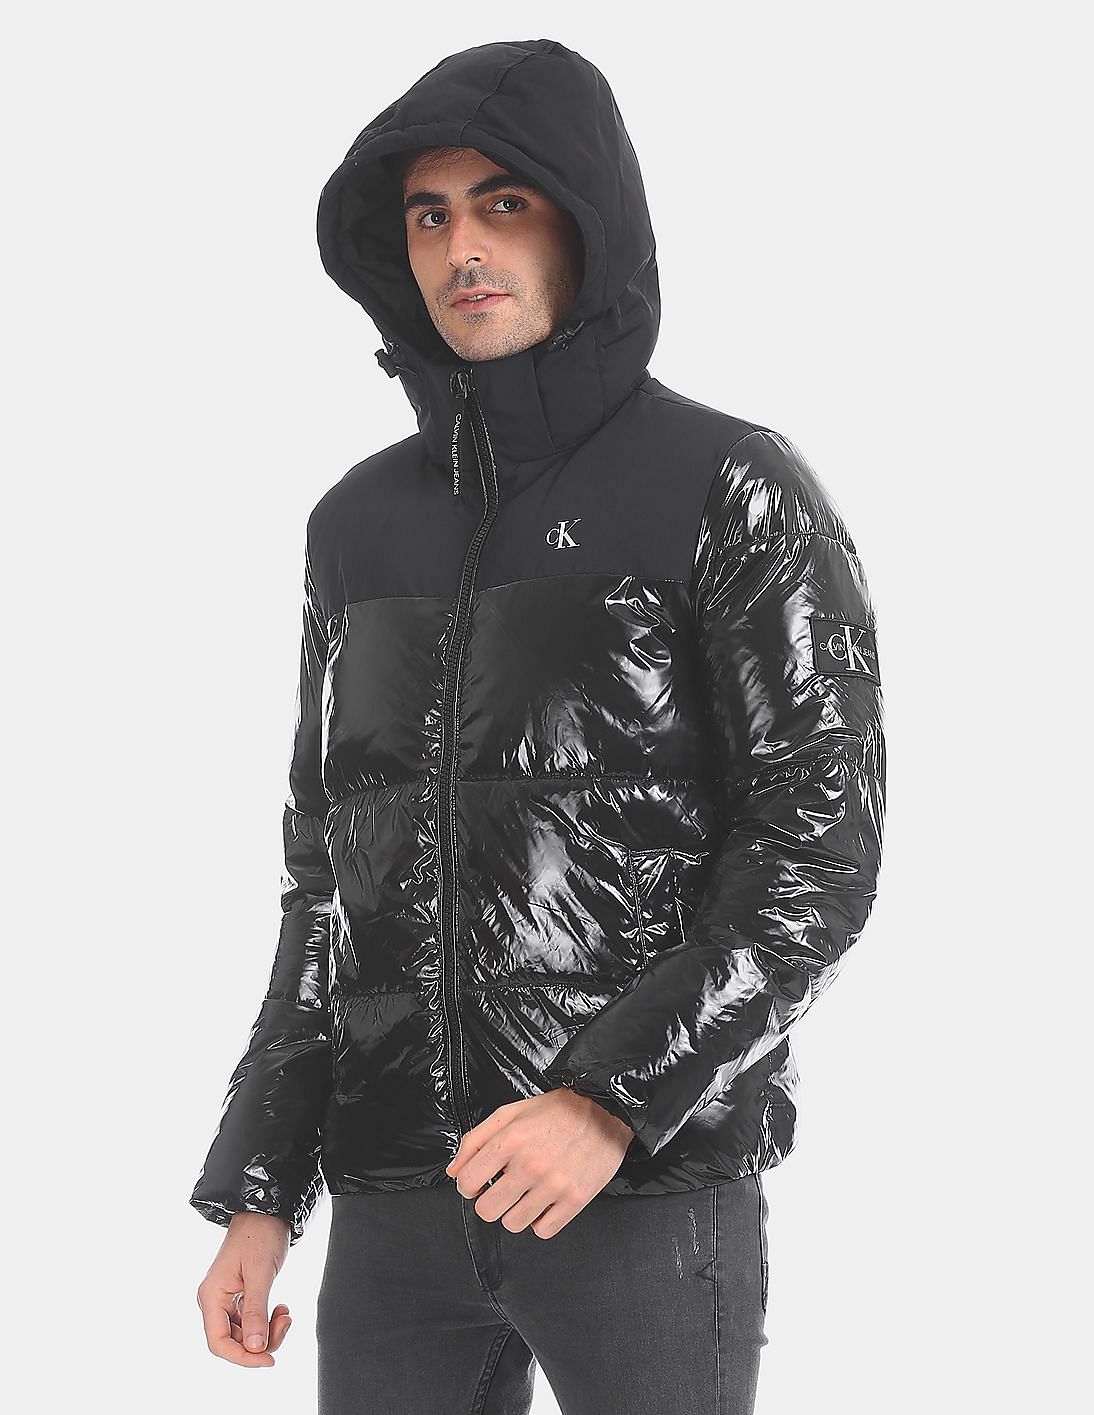 Calvin Klein High Shine Gloss Men’s Hooded Puffer Jacket Black Size XL Black